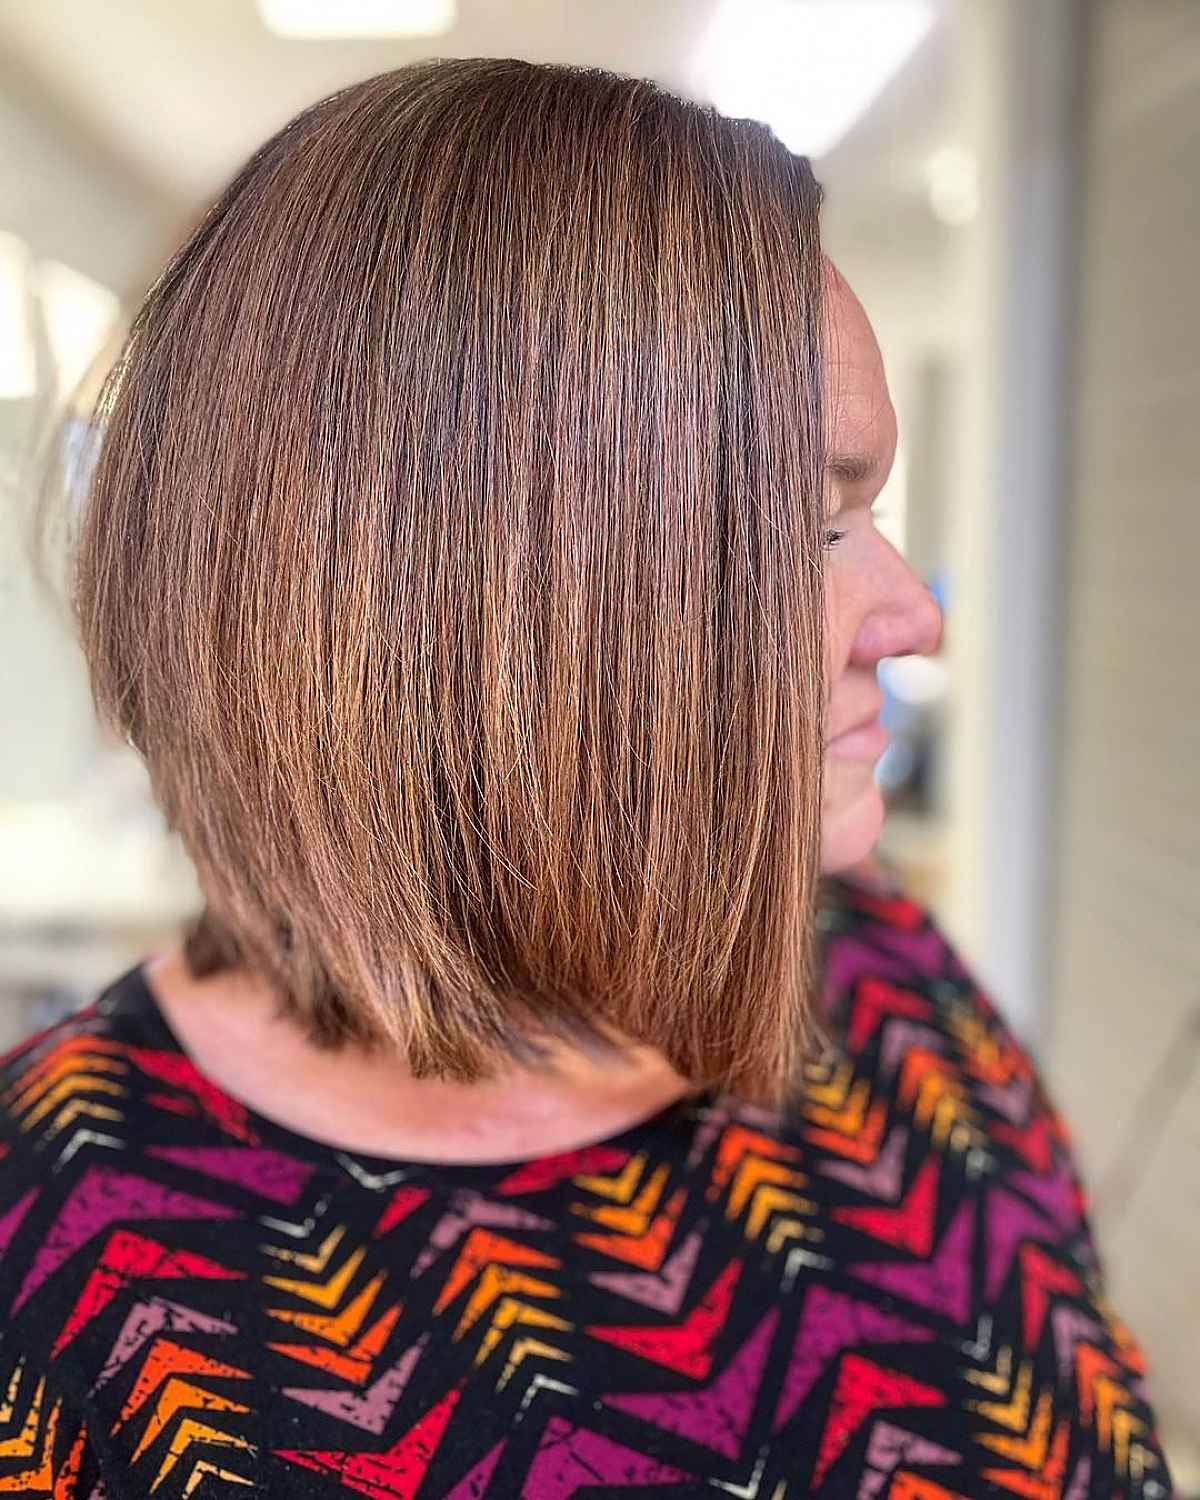 Cinnamon Spice Hair Color on a Bob Cut for older generation